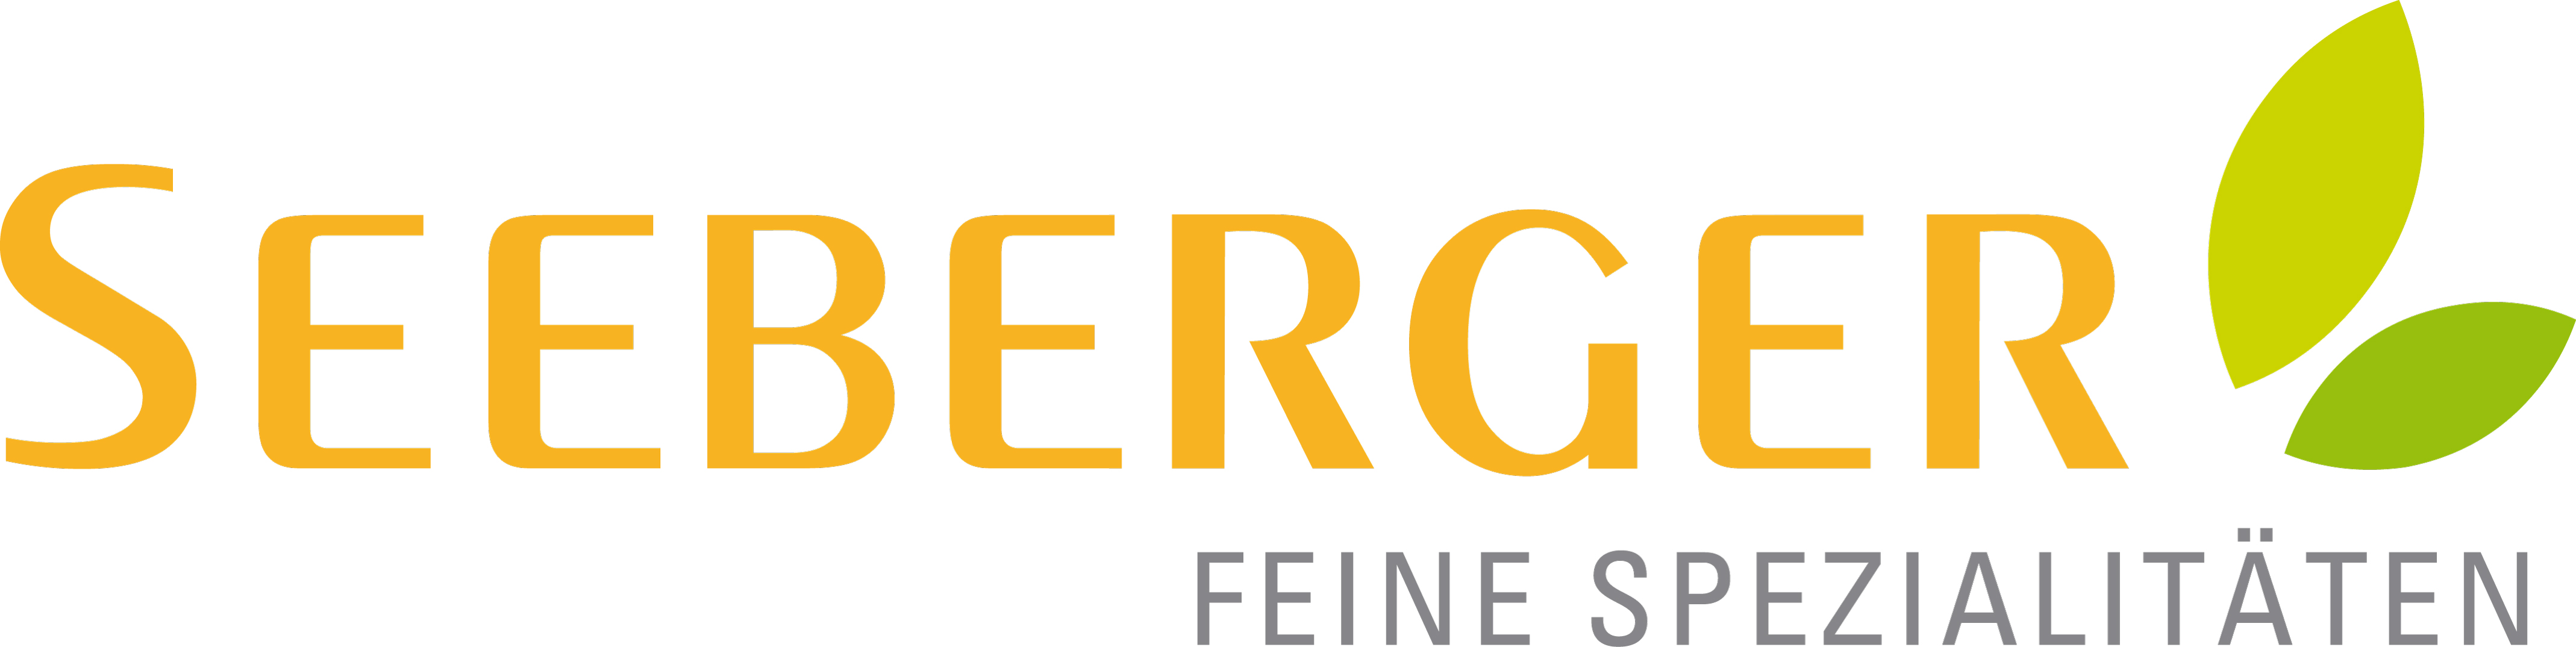 File:Seeberger Feine Spezialitäten Logo.jpg - Wikimedia Commons